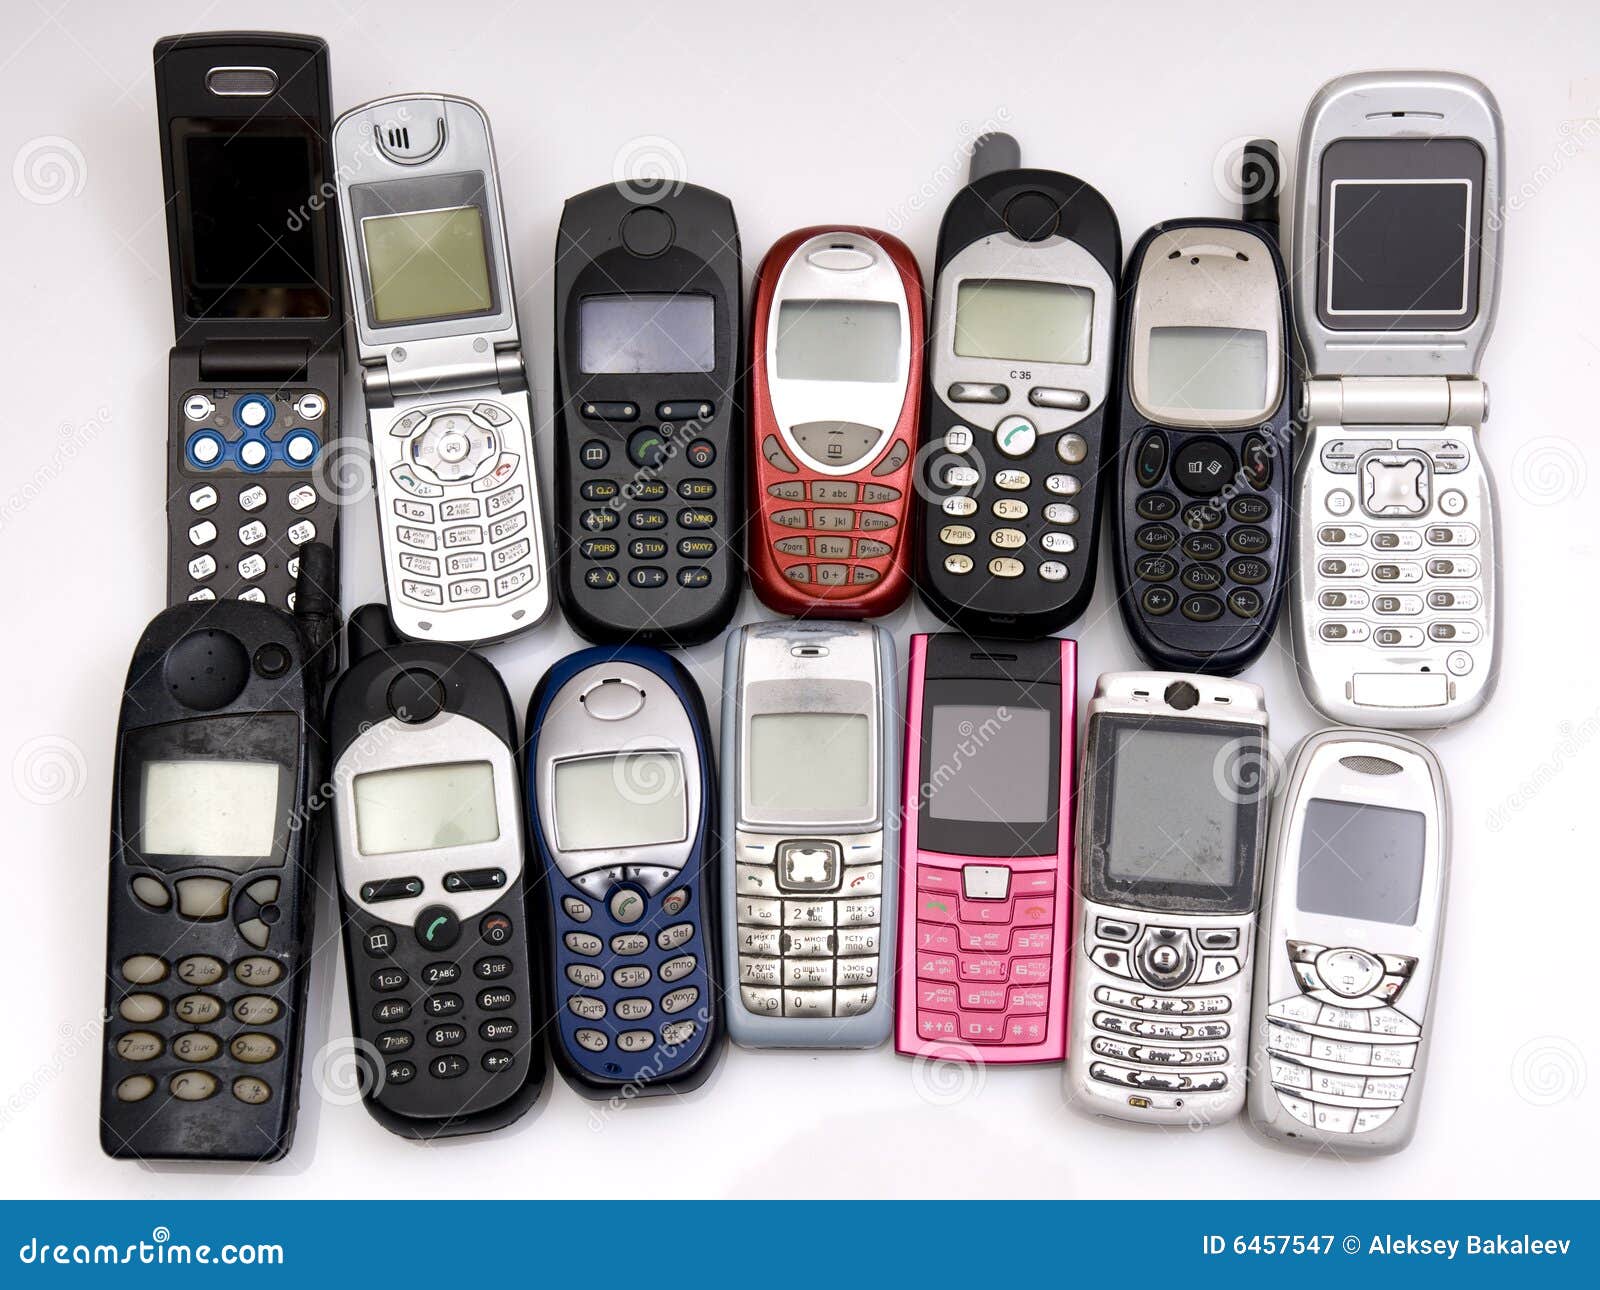 Teléfonos celulares imagen de archivo. Imagen de industria - 6457547